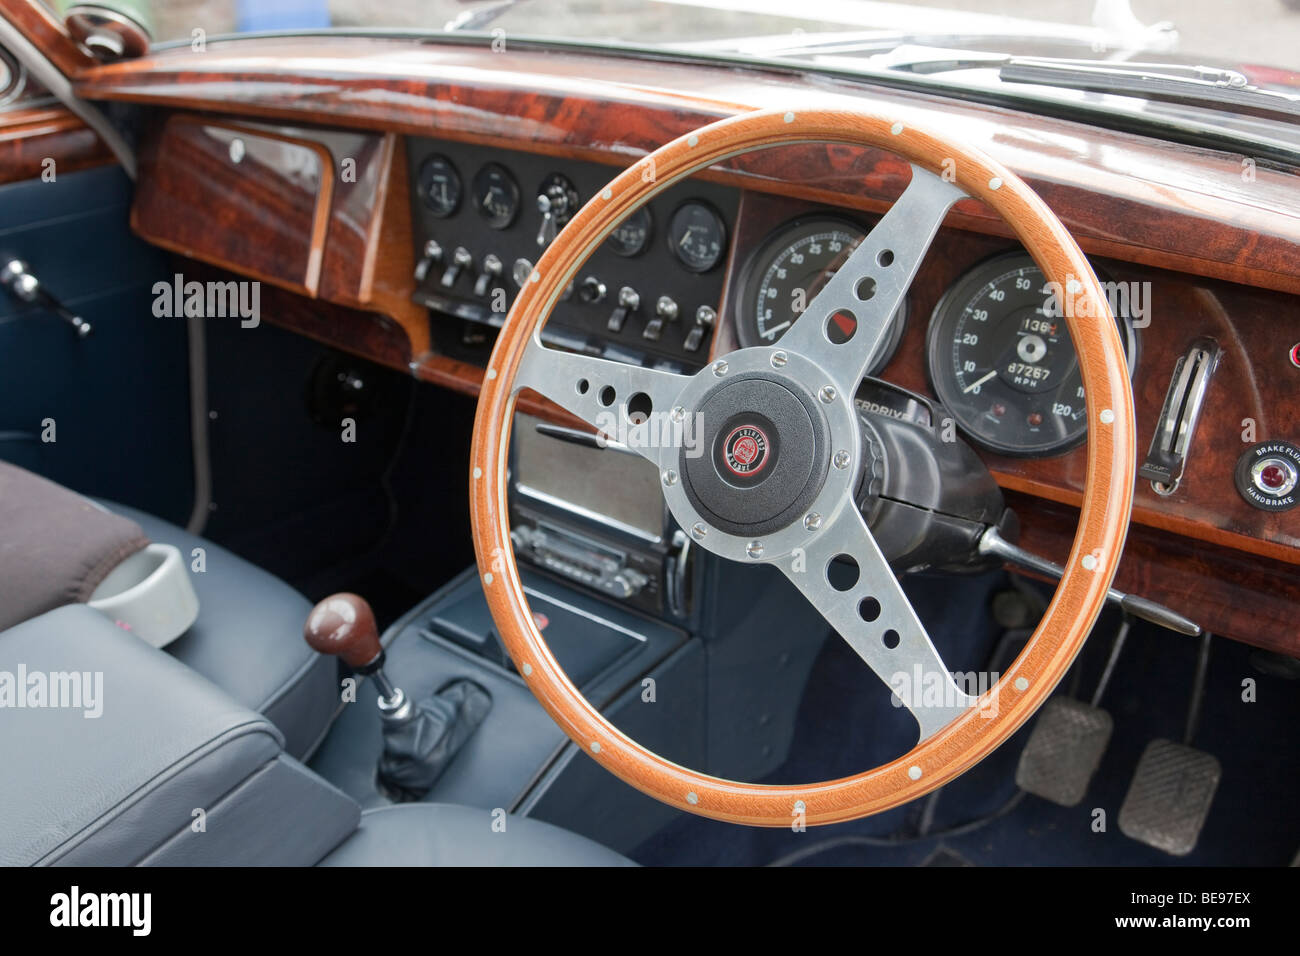  Jaguar Mk 2 dashboard  Stock Photo Alamy